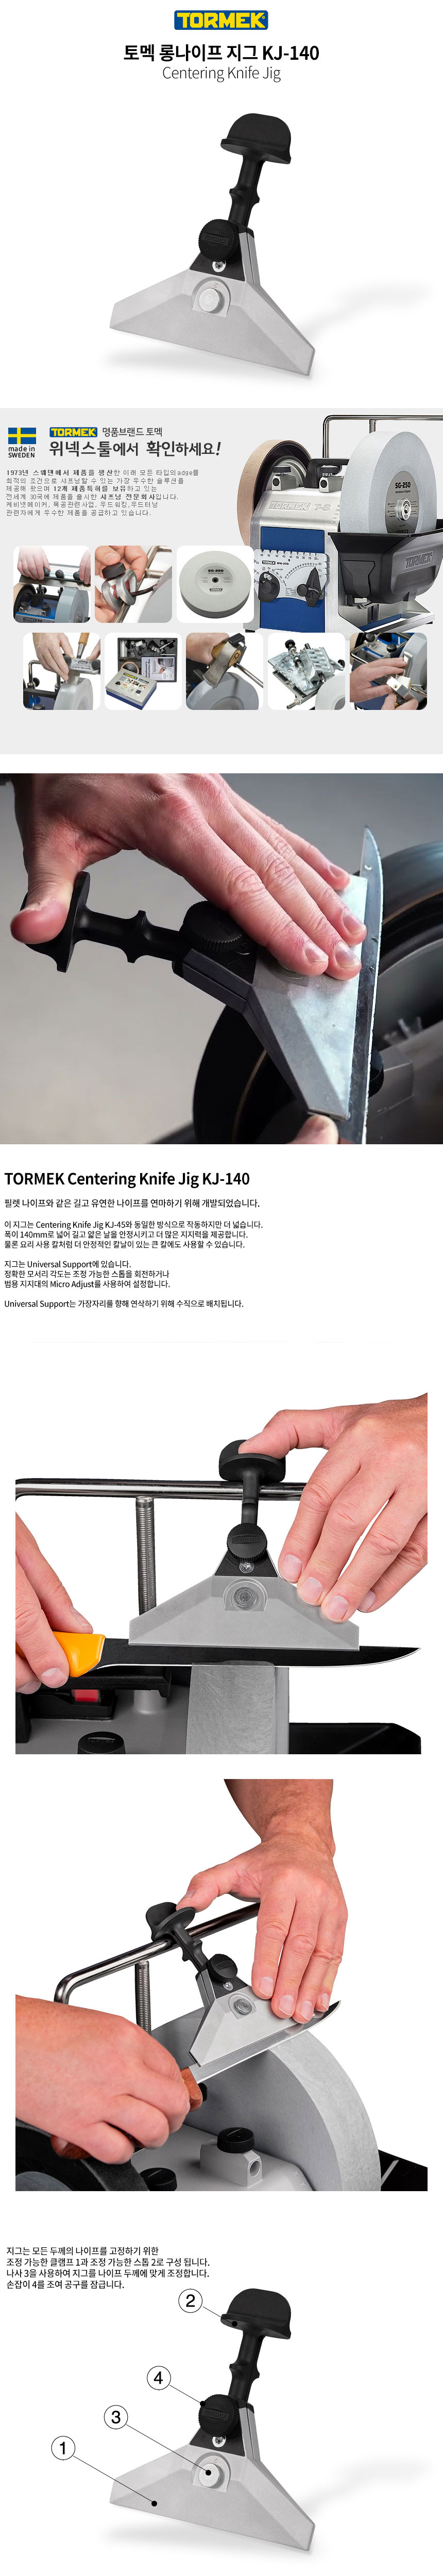 KJ-140 Wide Centering Knife Jig - Tormek